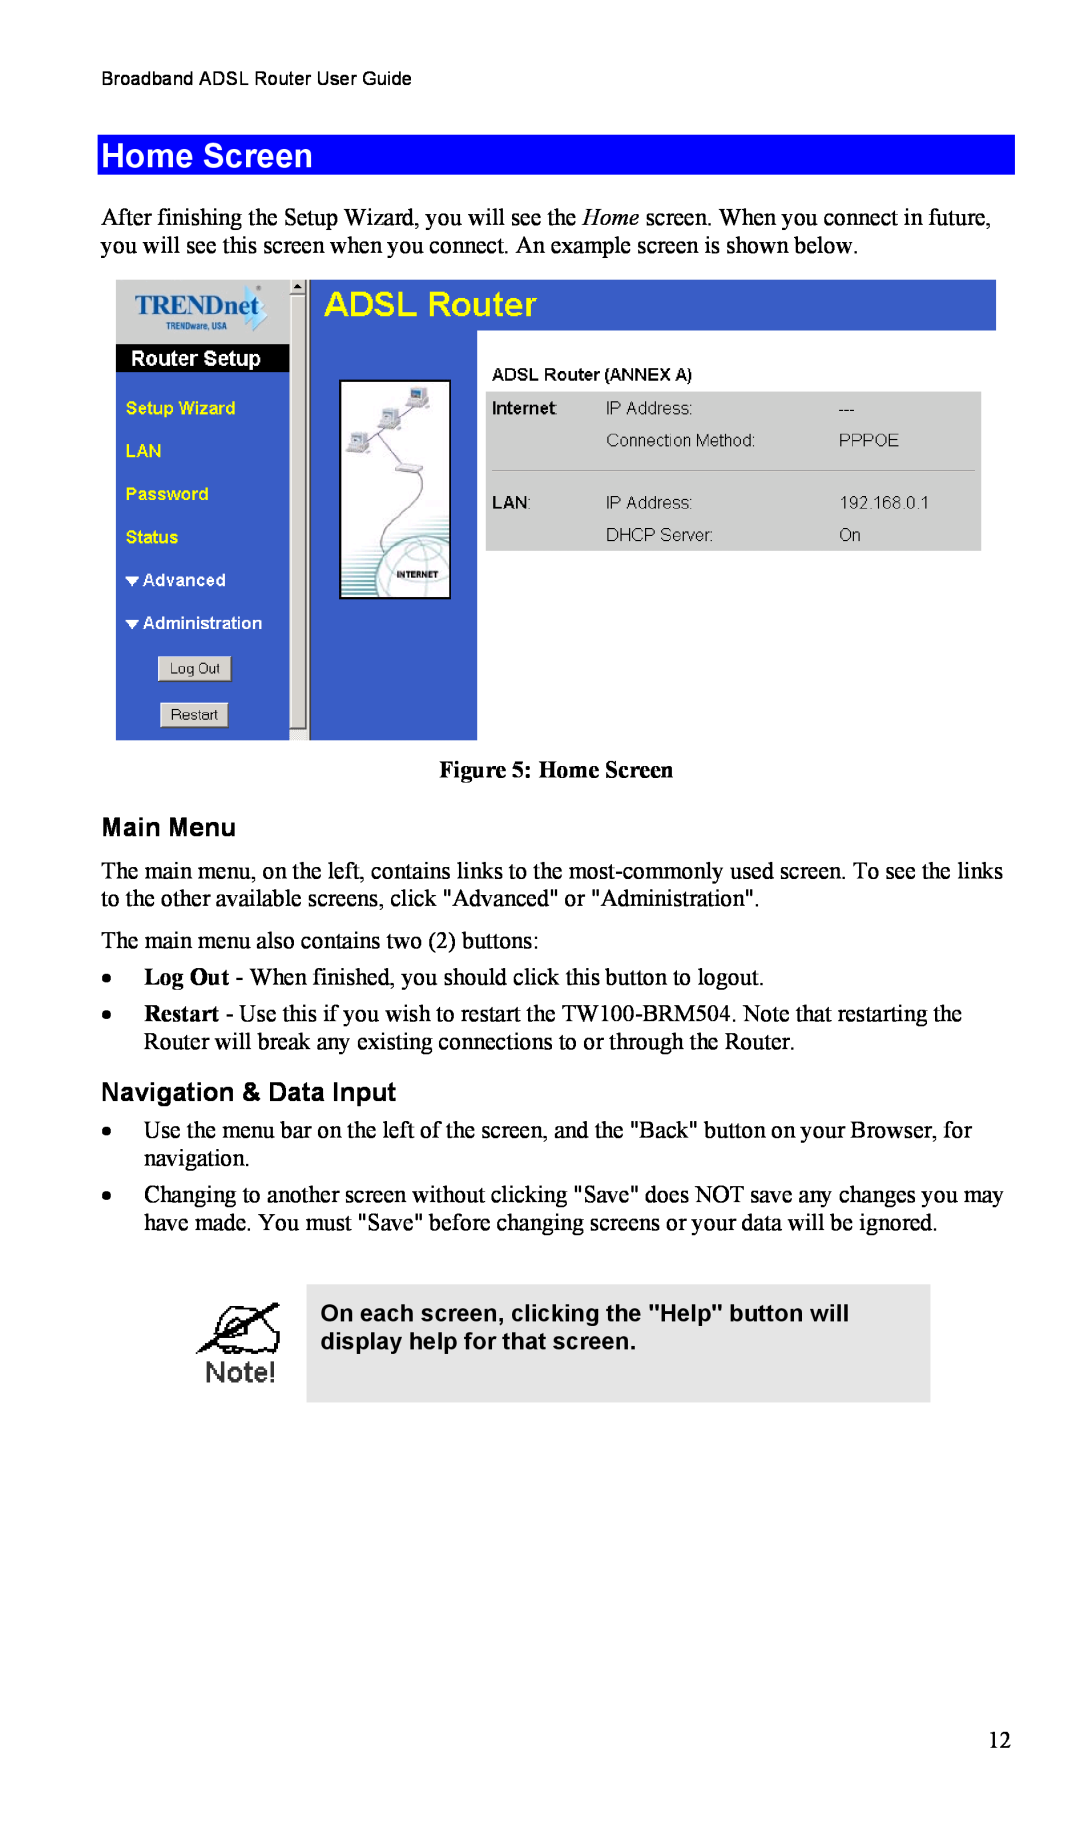 TRENDnet TW100-BRM504 manual Home Screen, Main Menu, Navigation & Data Input 